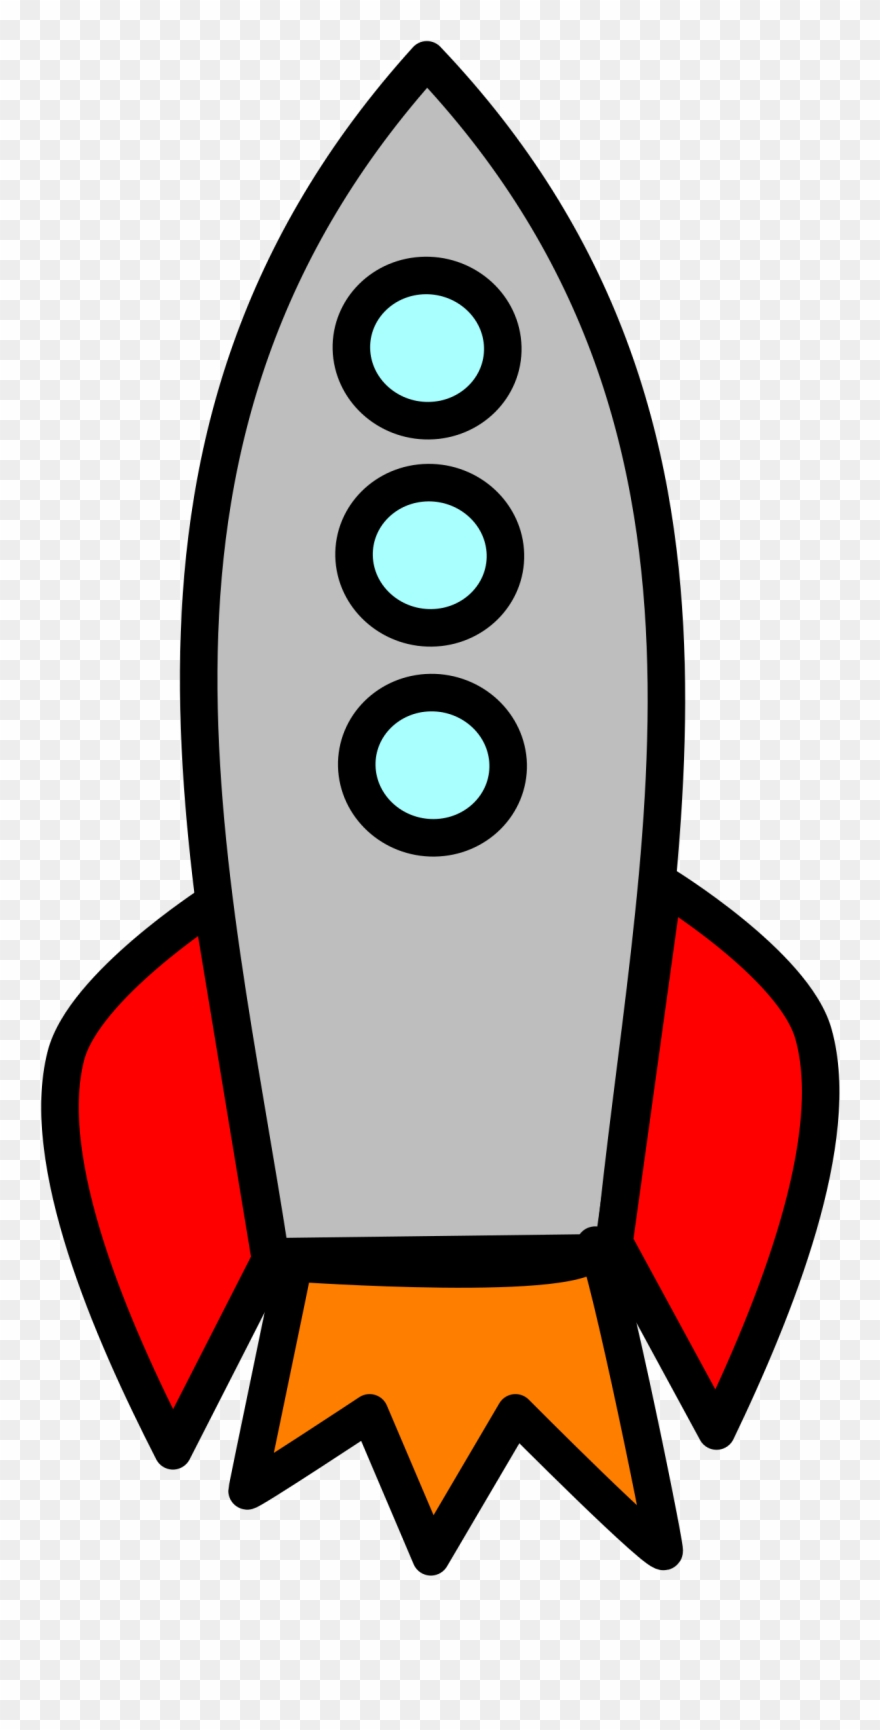 Rocket clipart nuclear.